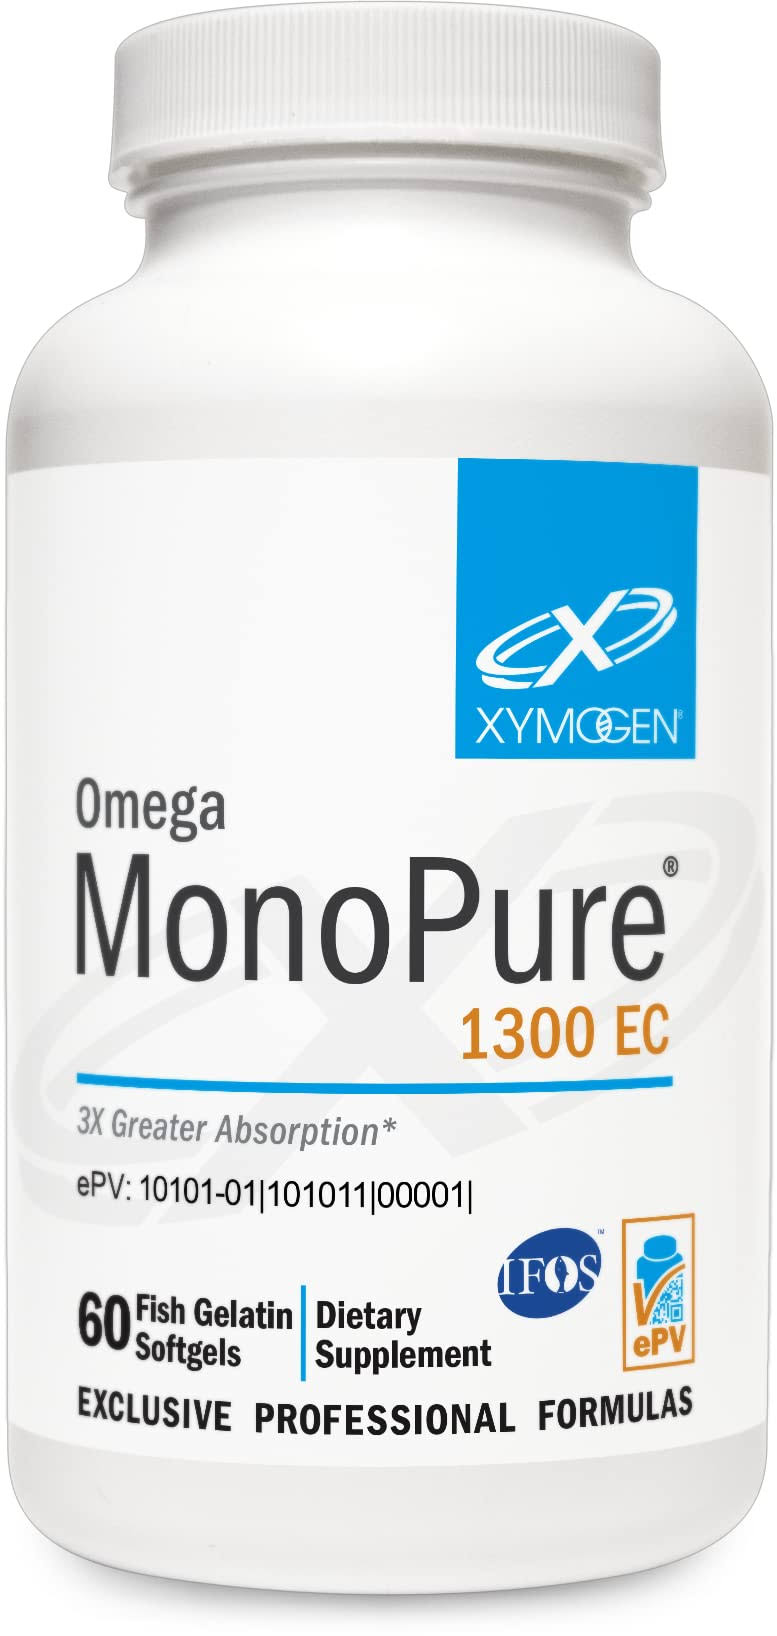 Xymogen Omega MonoPure 1300 EC - 1,300 MG - 60 Softgels